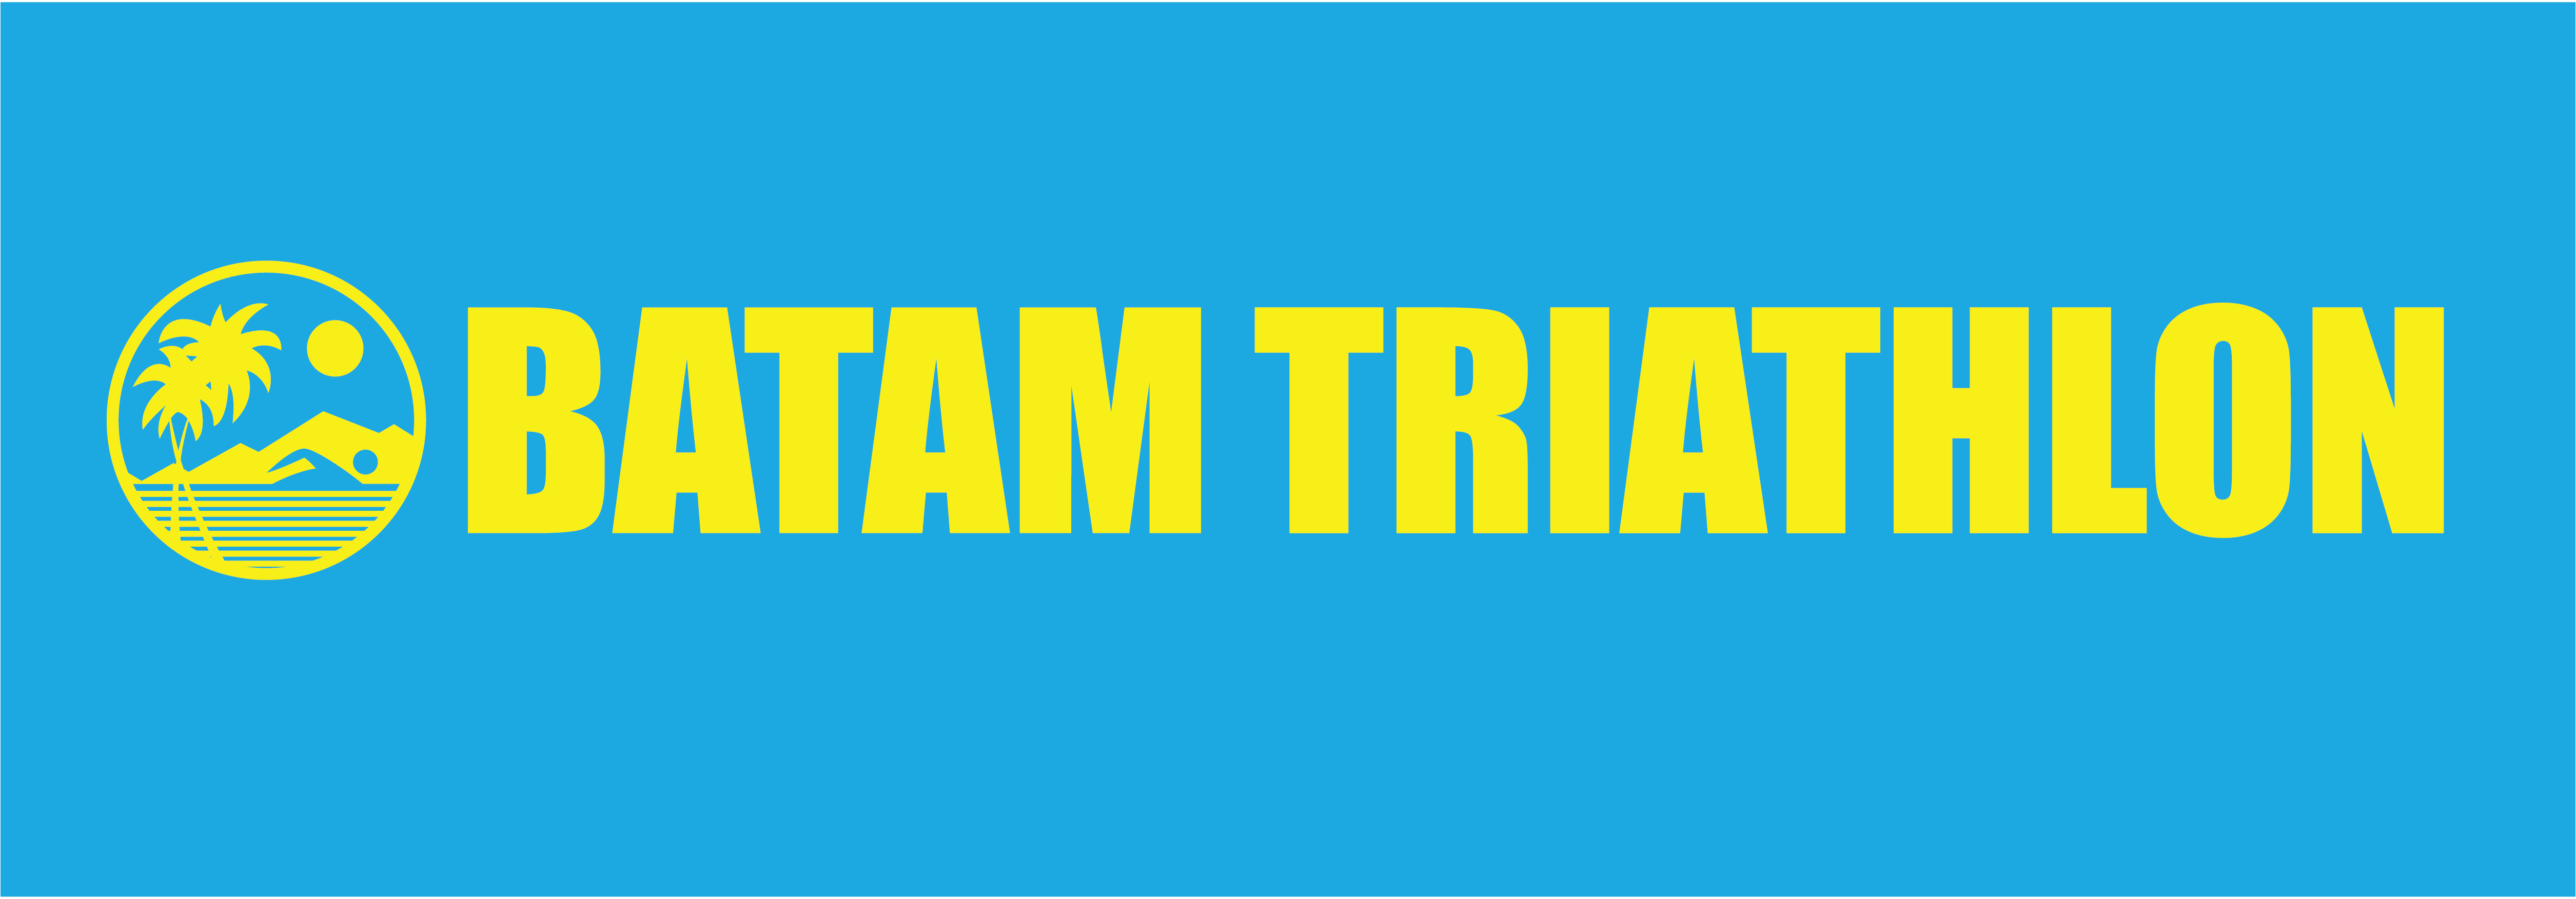 Batam Triathlon